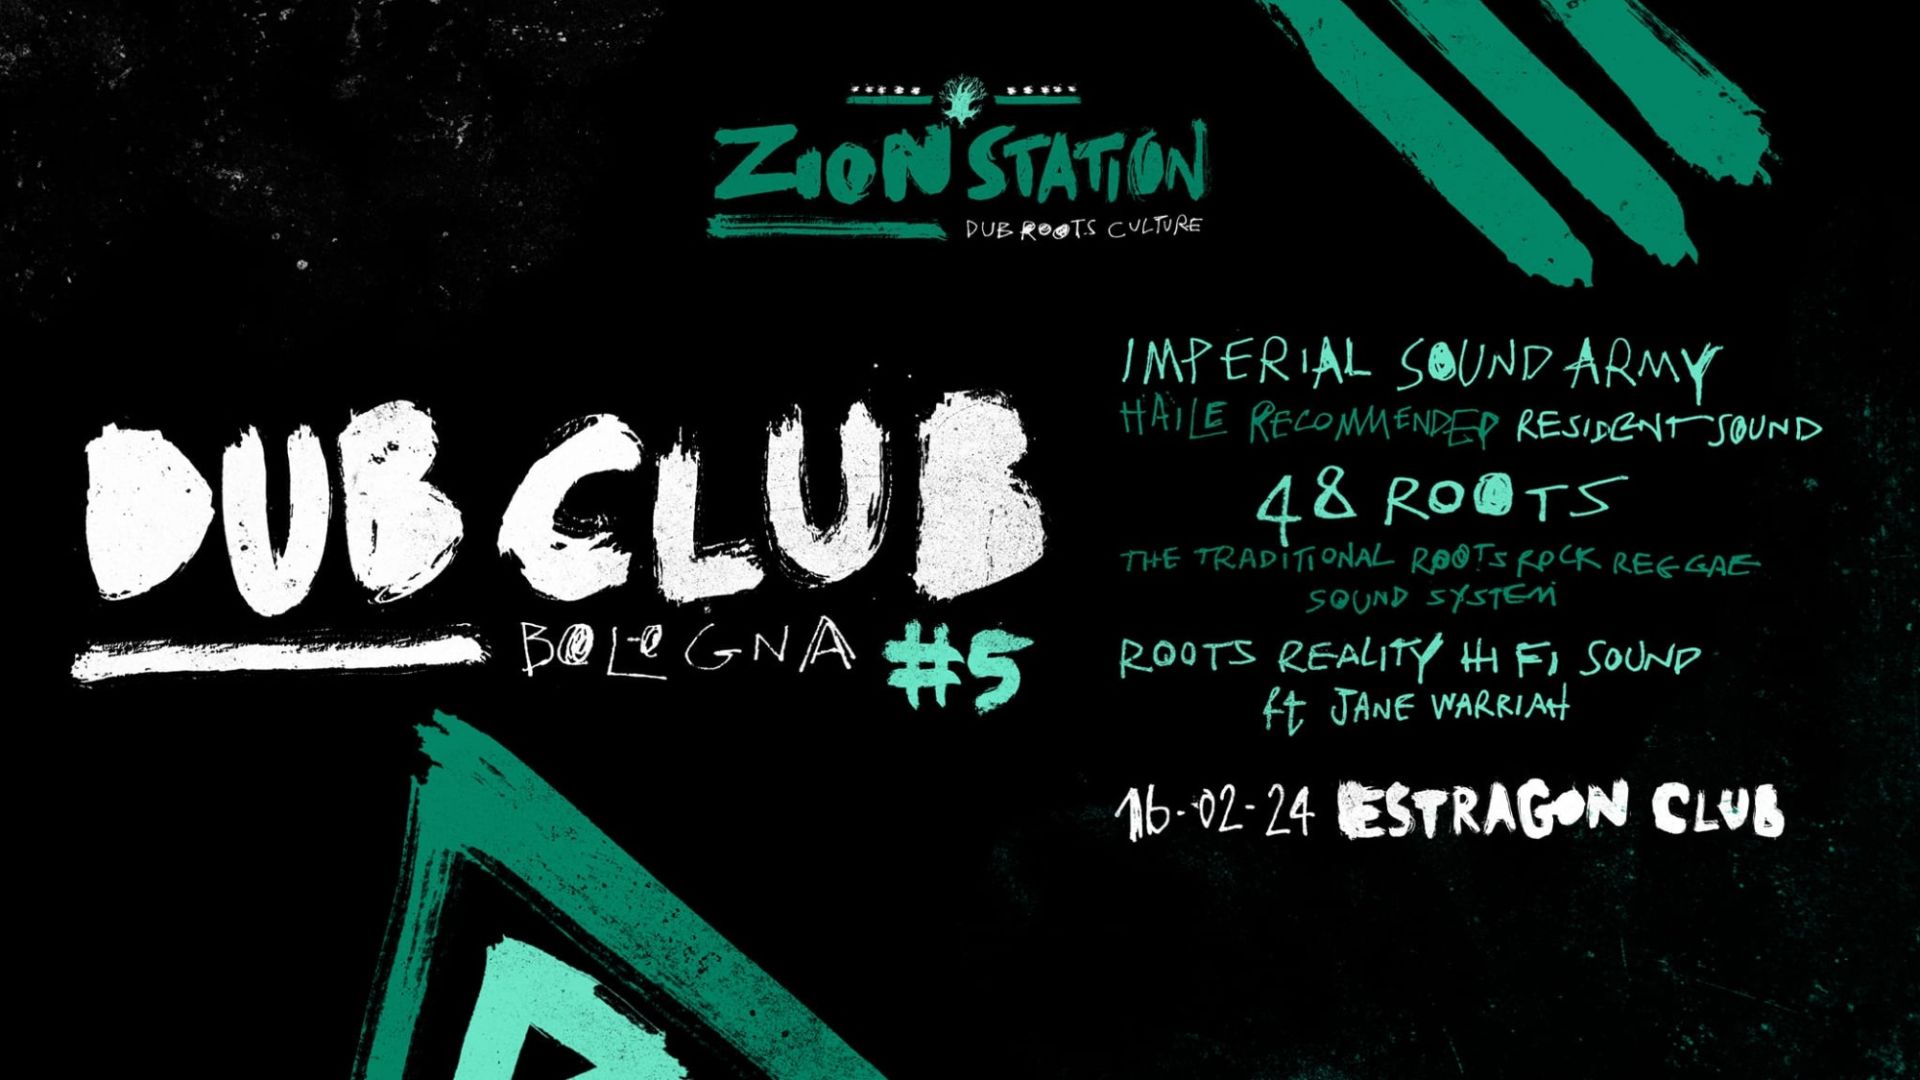 Zion Station Festival presents Dub Club Bologna #5